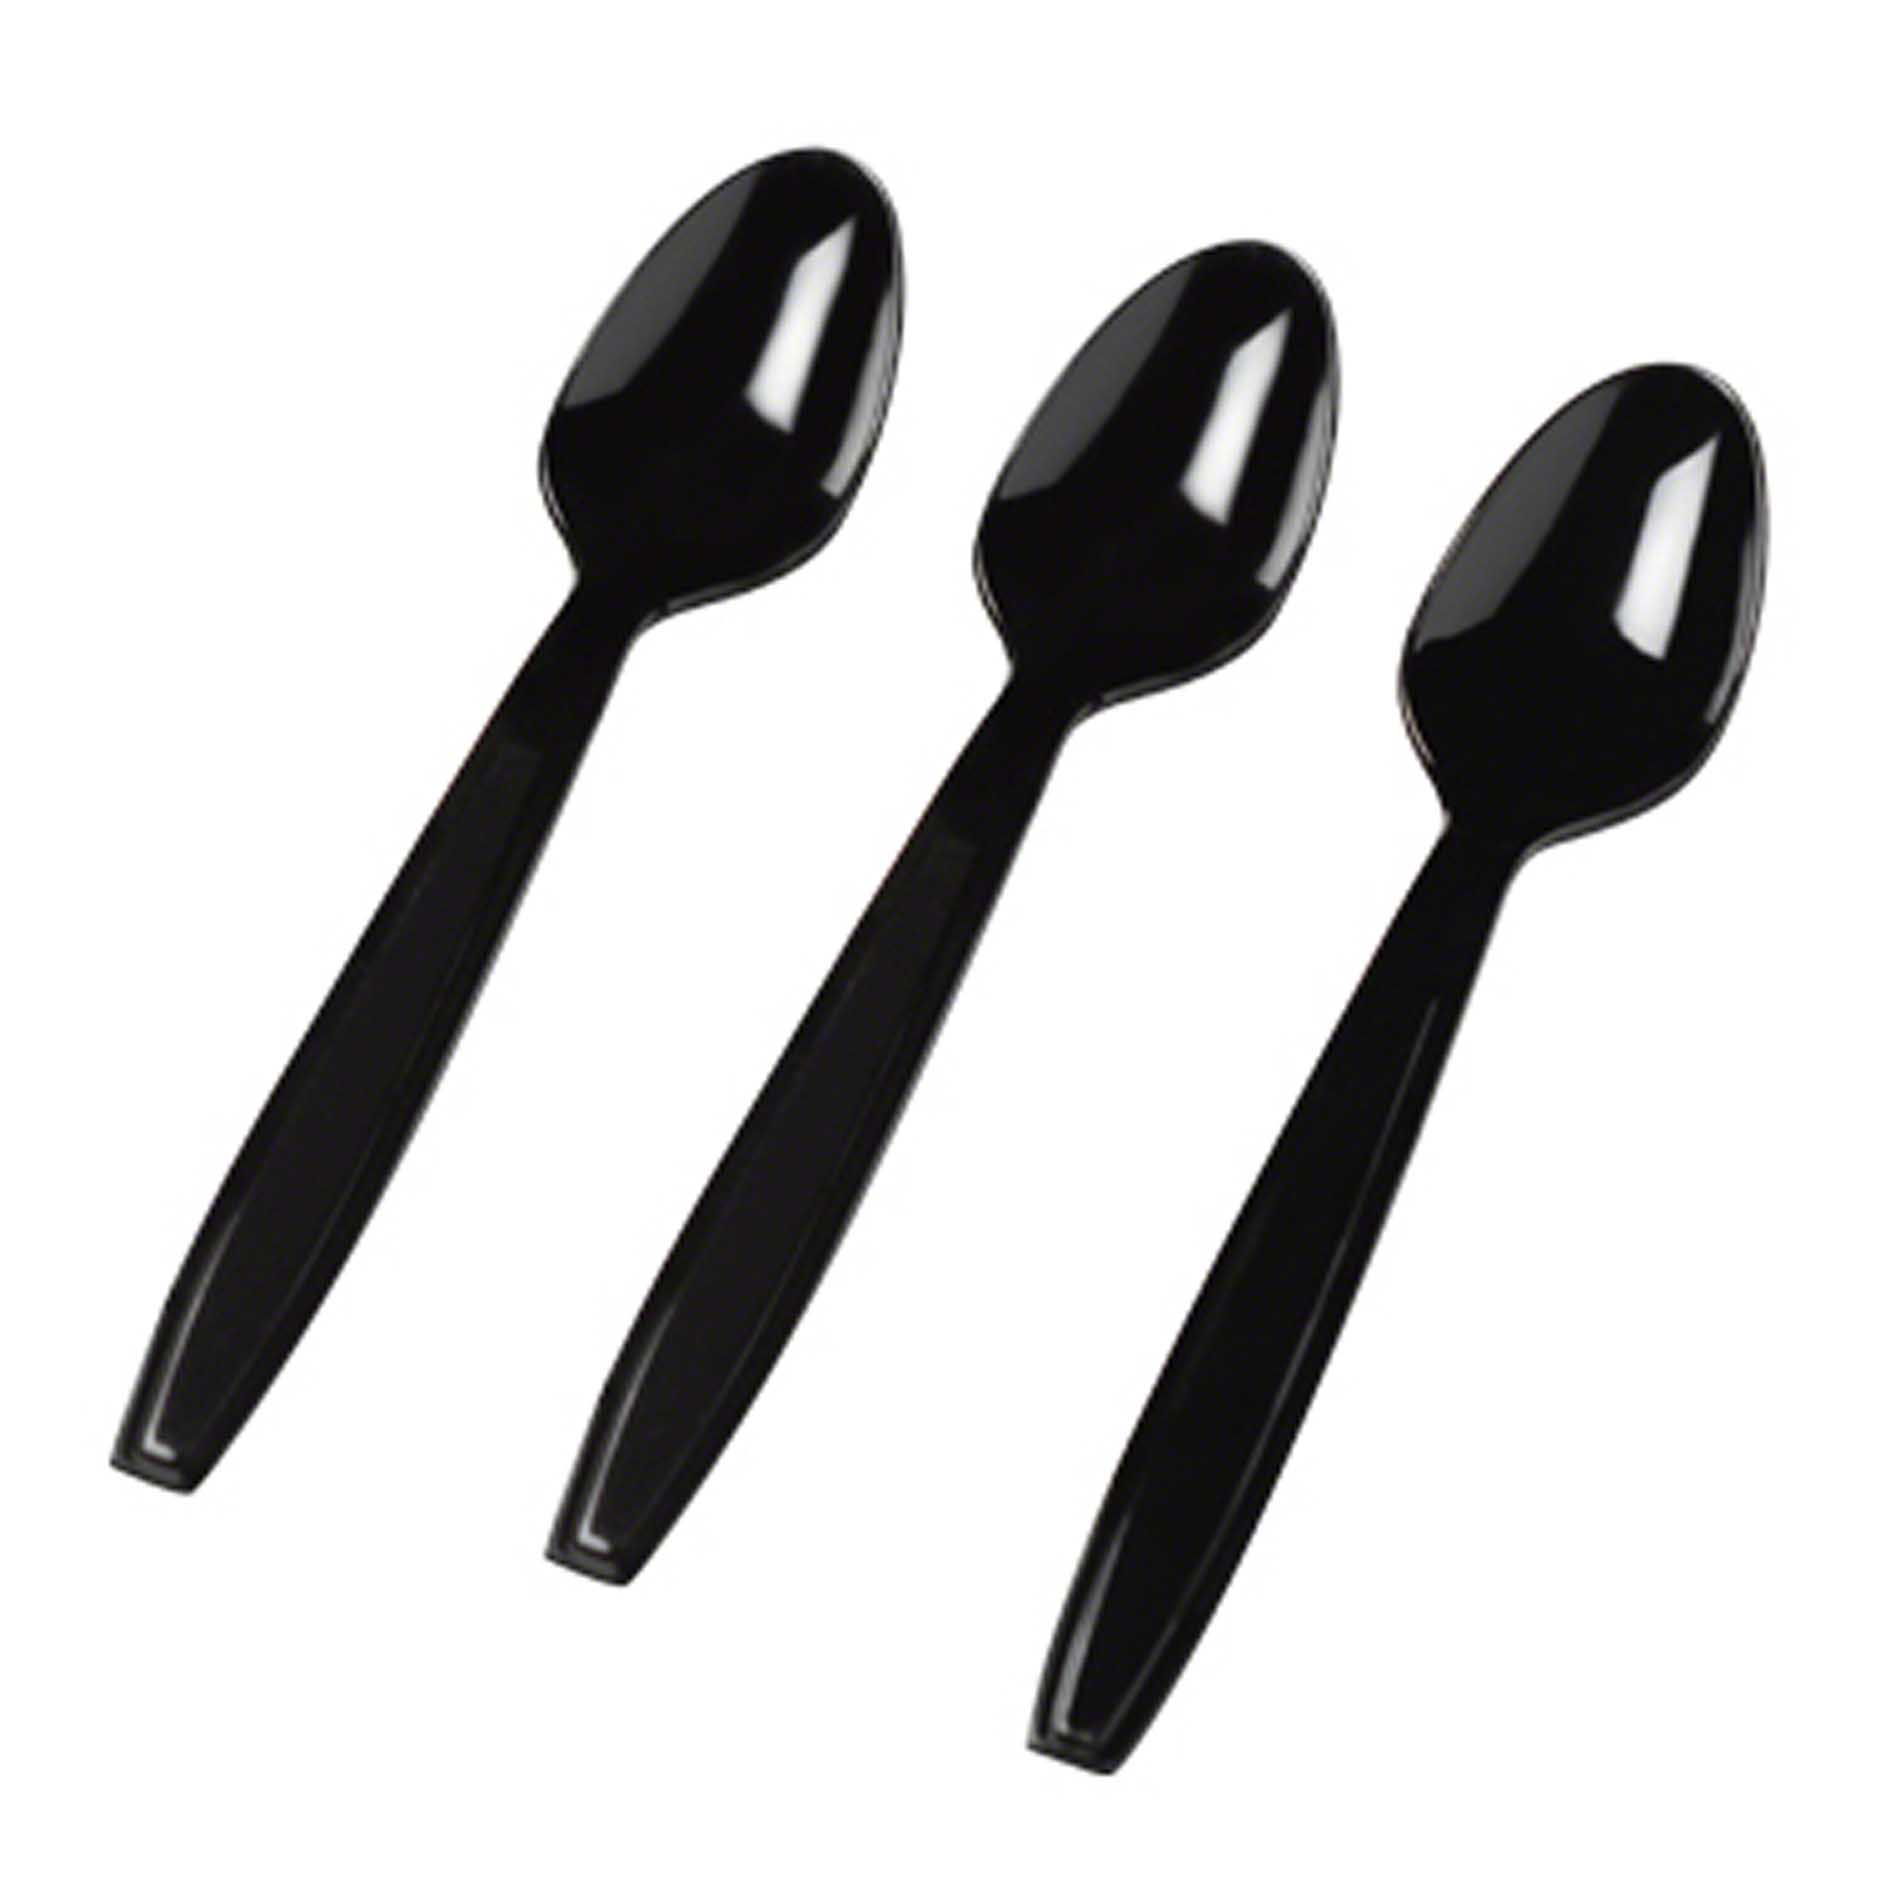 Plastic spoon clipart